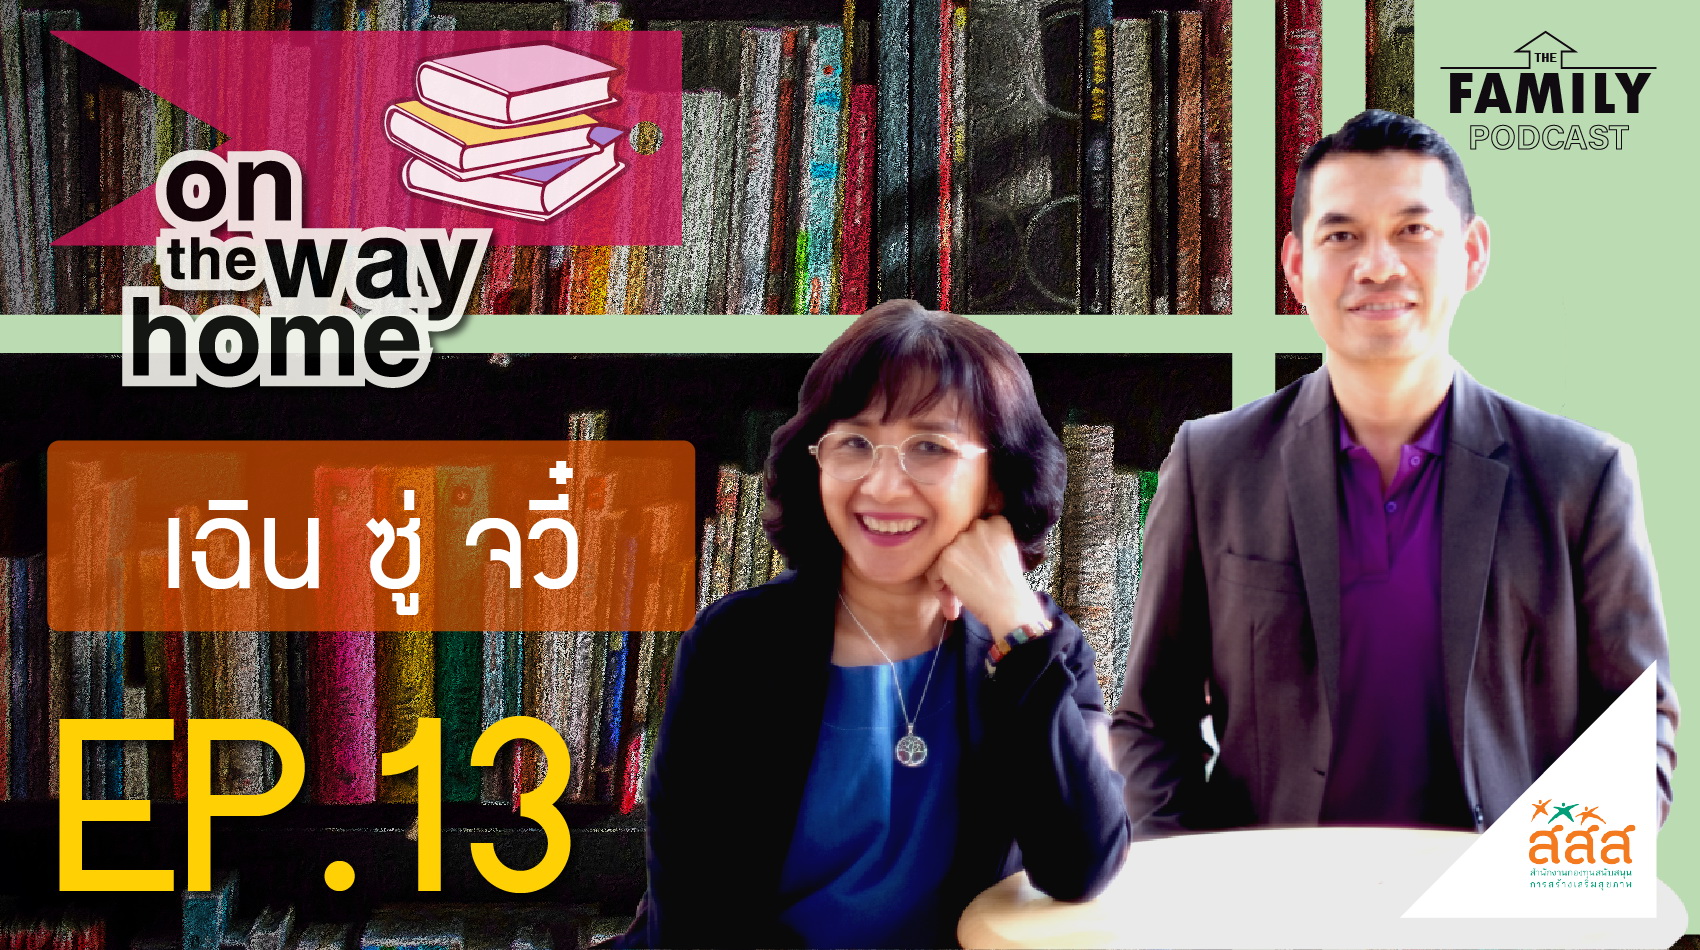 The Family Podcast On the Way Home EP. 13 เฉิน ซู่ จวี๋ แม่ค้าขายผักที่รวยที่สุดในโลก